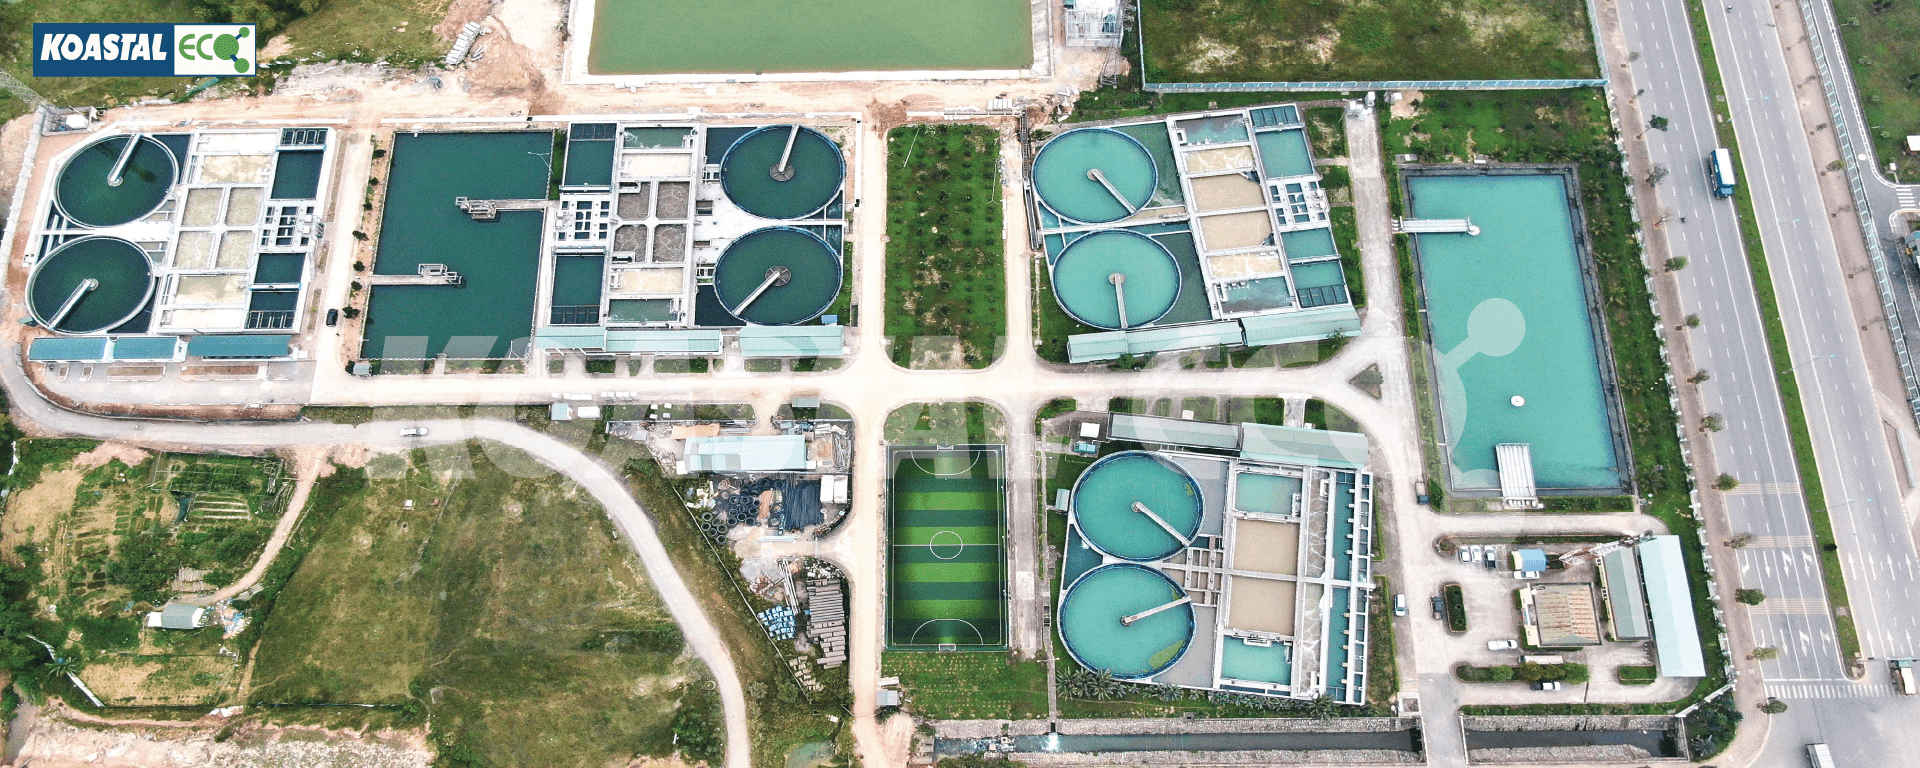 Yen Binh 工业 - 都市 - 服务园区之废水集中处理厂